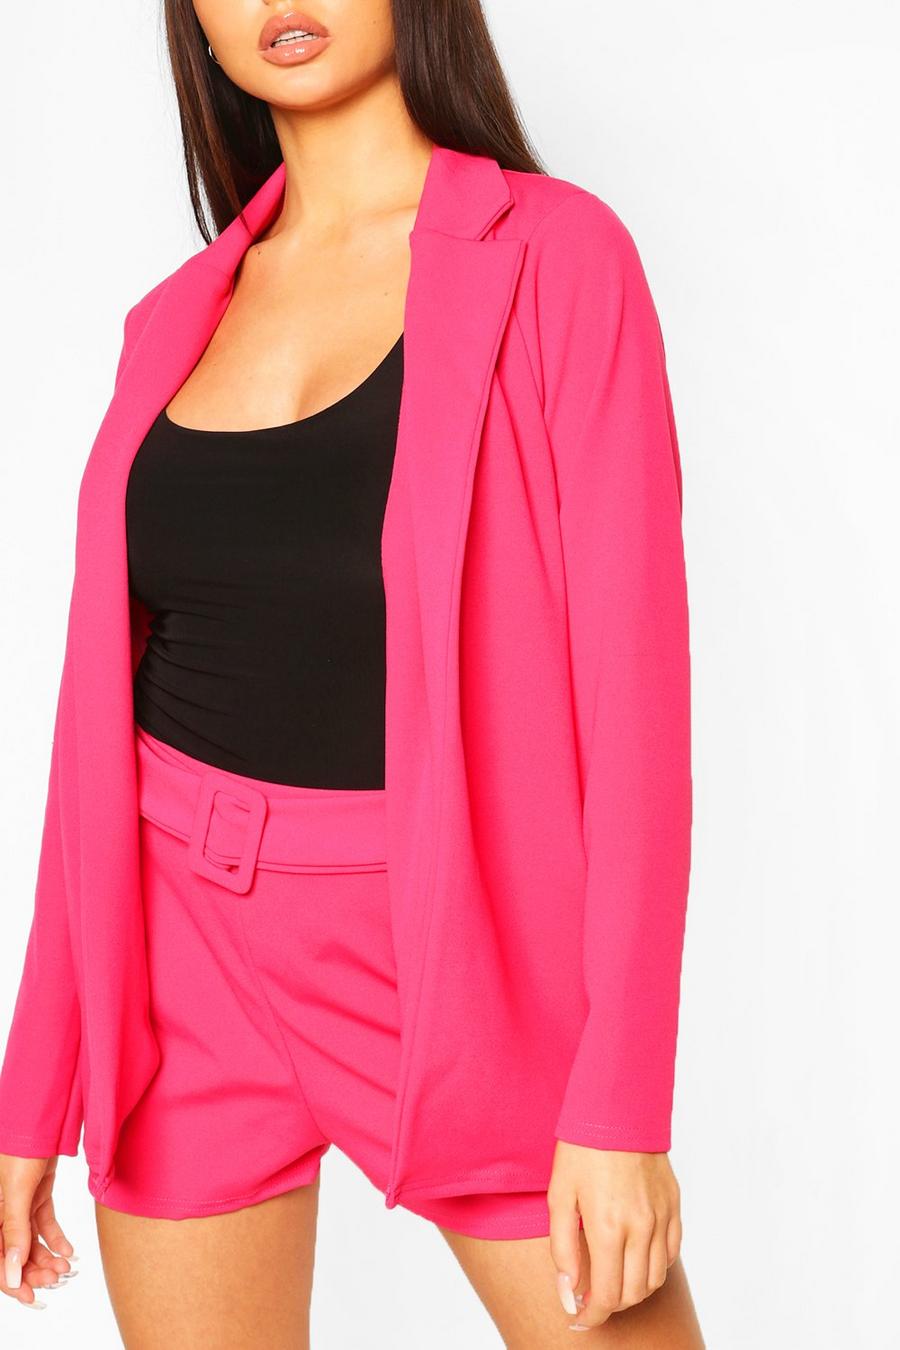 Hot pink rosa Blazer And Self Fabric Belt Short Suit Set